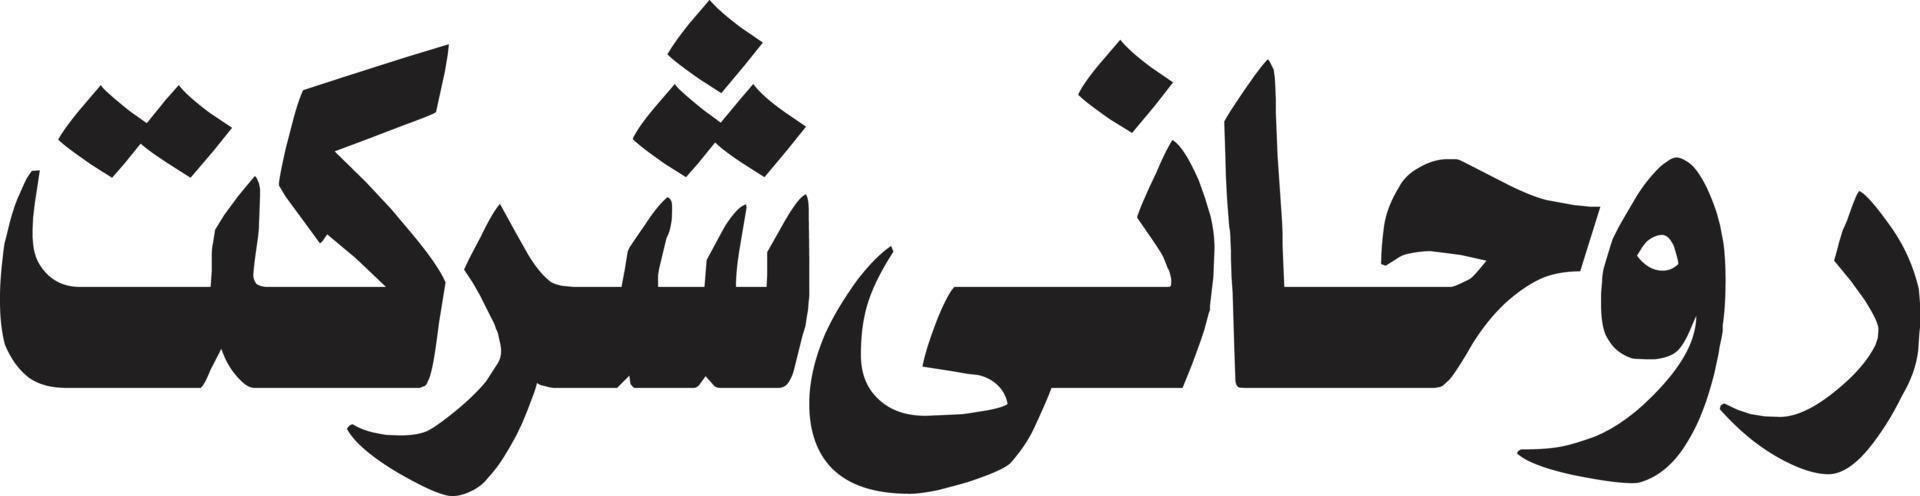 vetor livre de caligrafia islâmica rohani sherkat